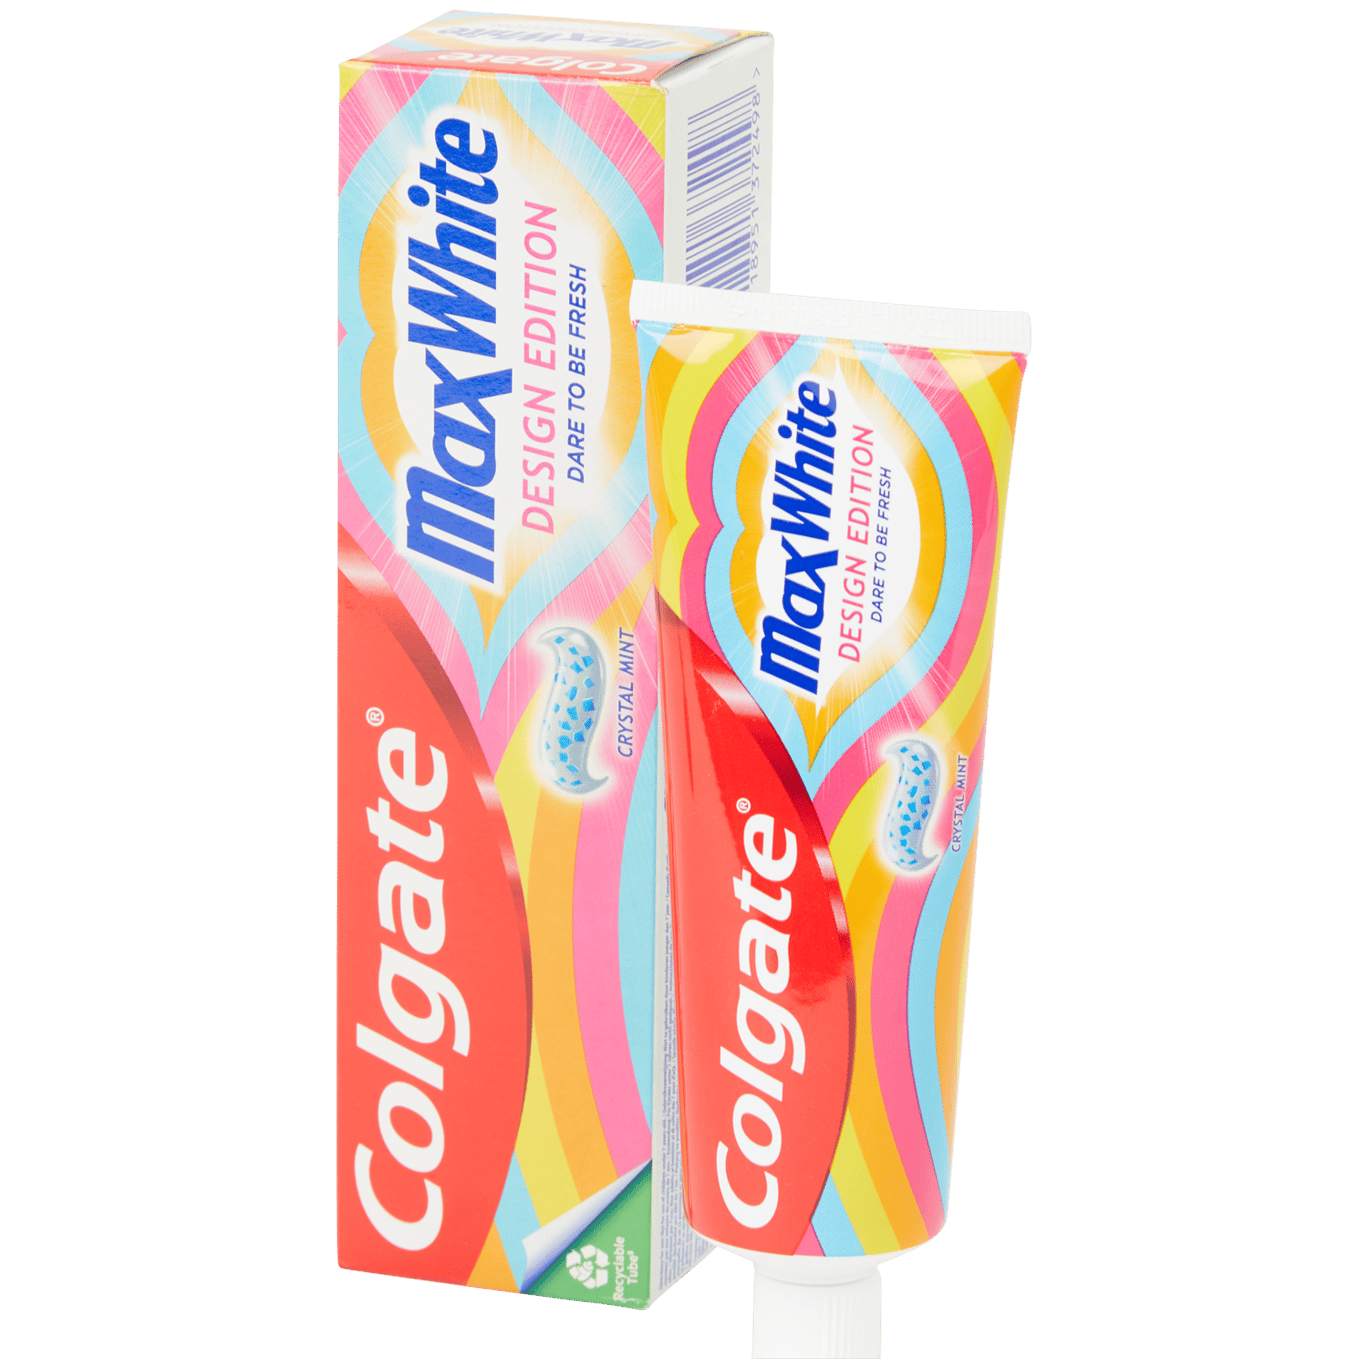 Pasta de dientes Colgate MaxWhite Max White Limited Edition